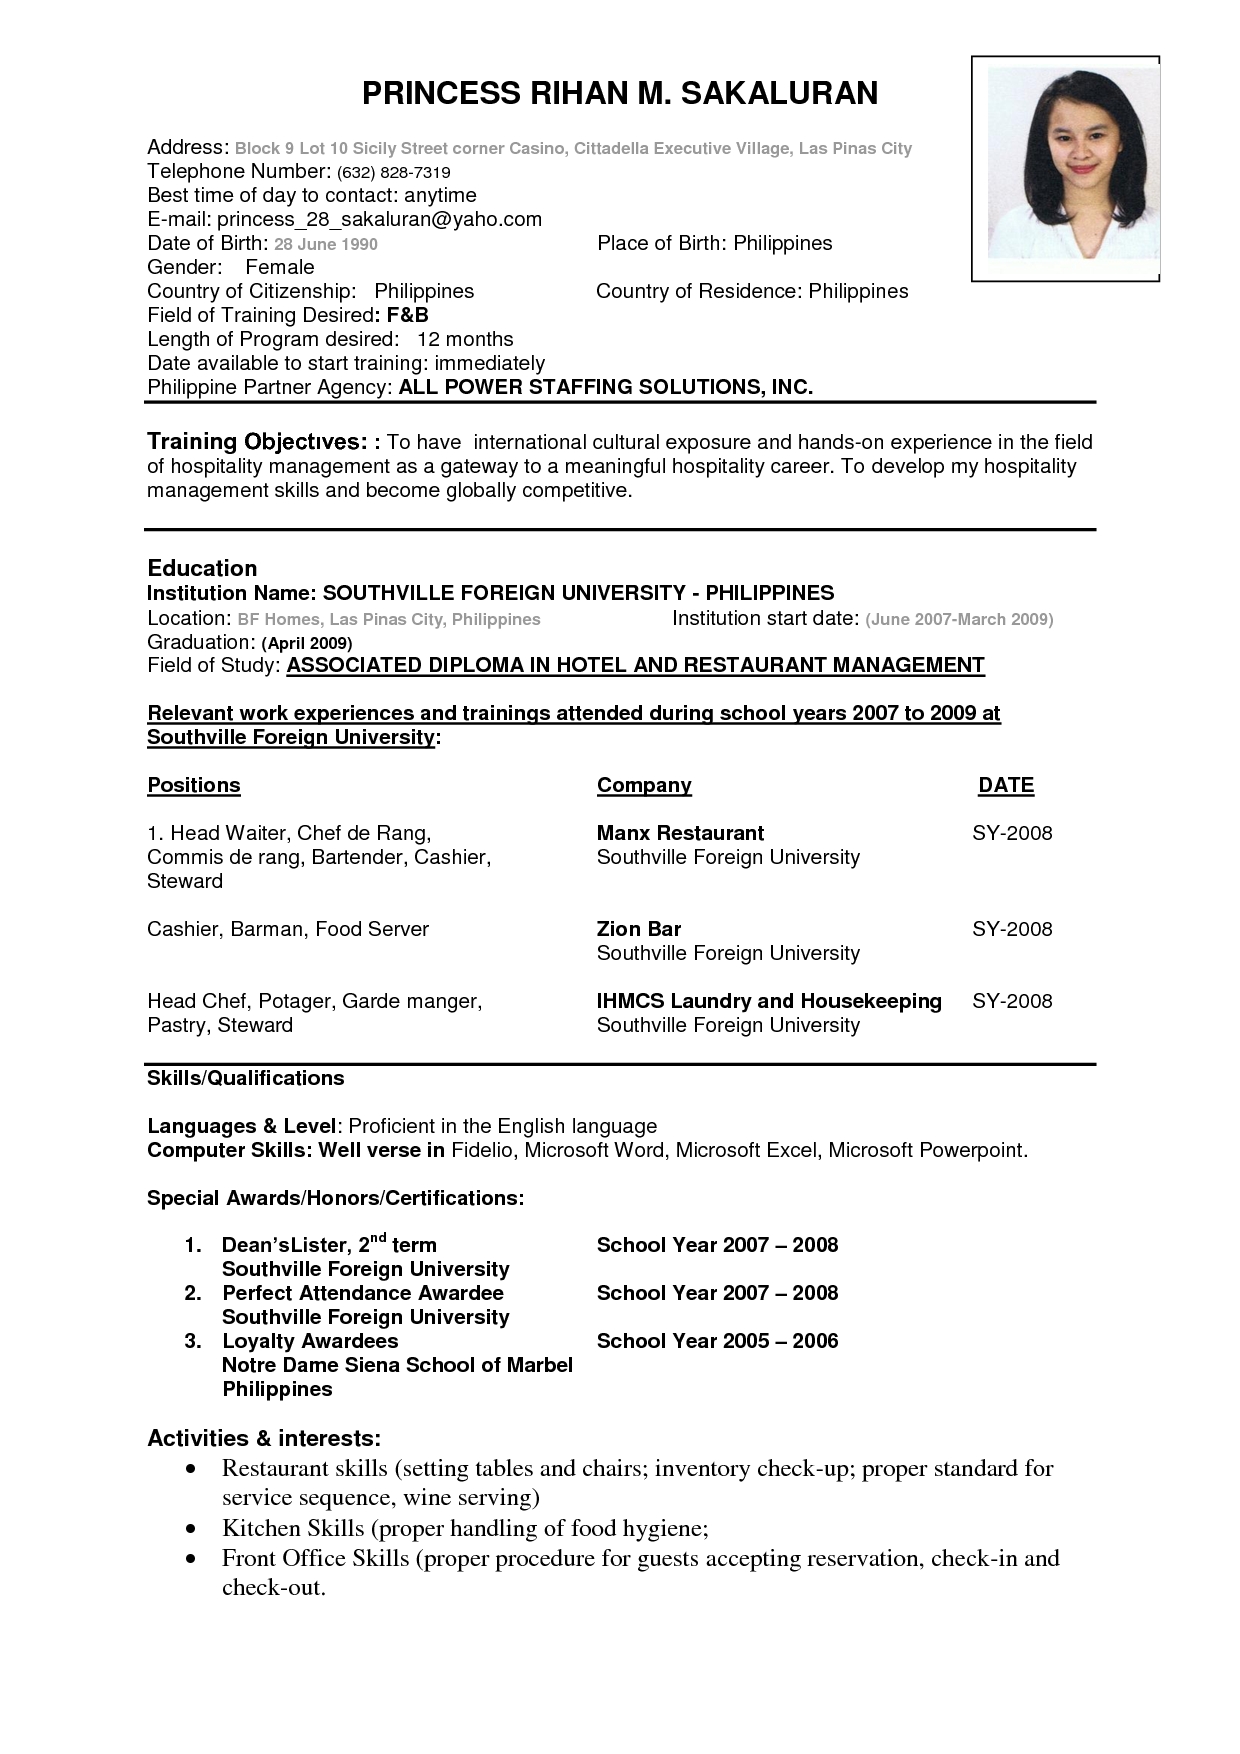 Resume Format Usa Jobs 